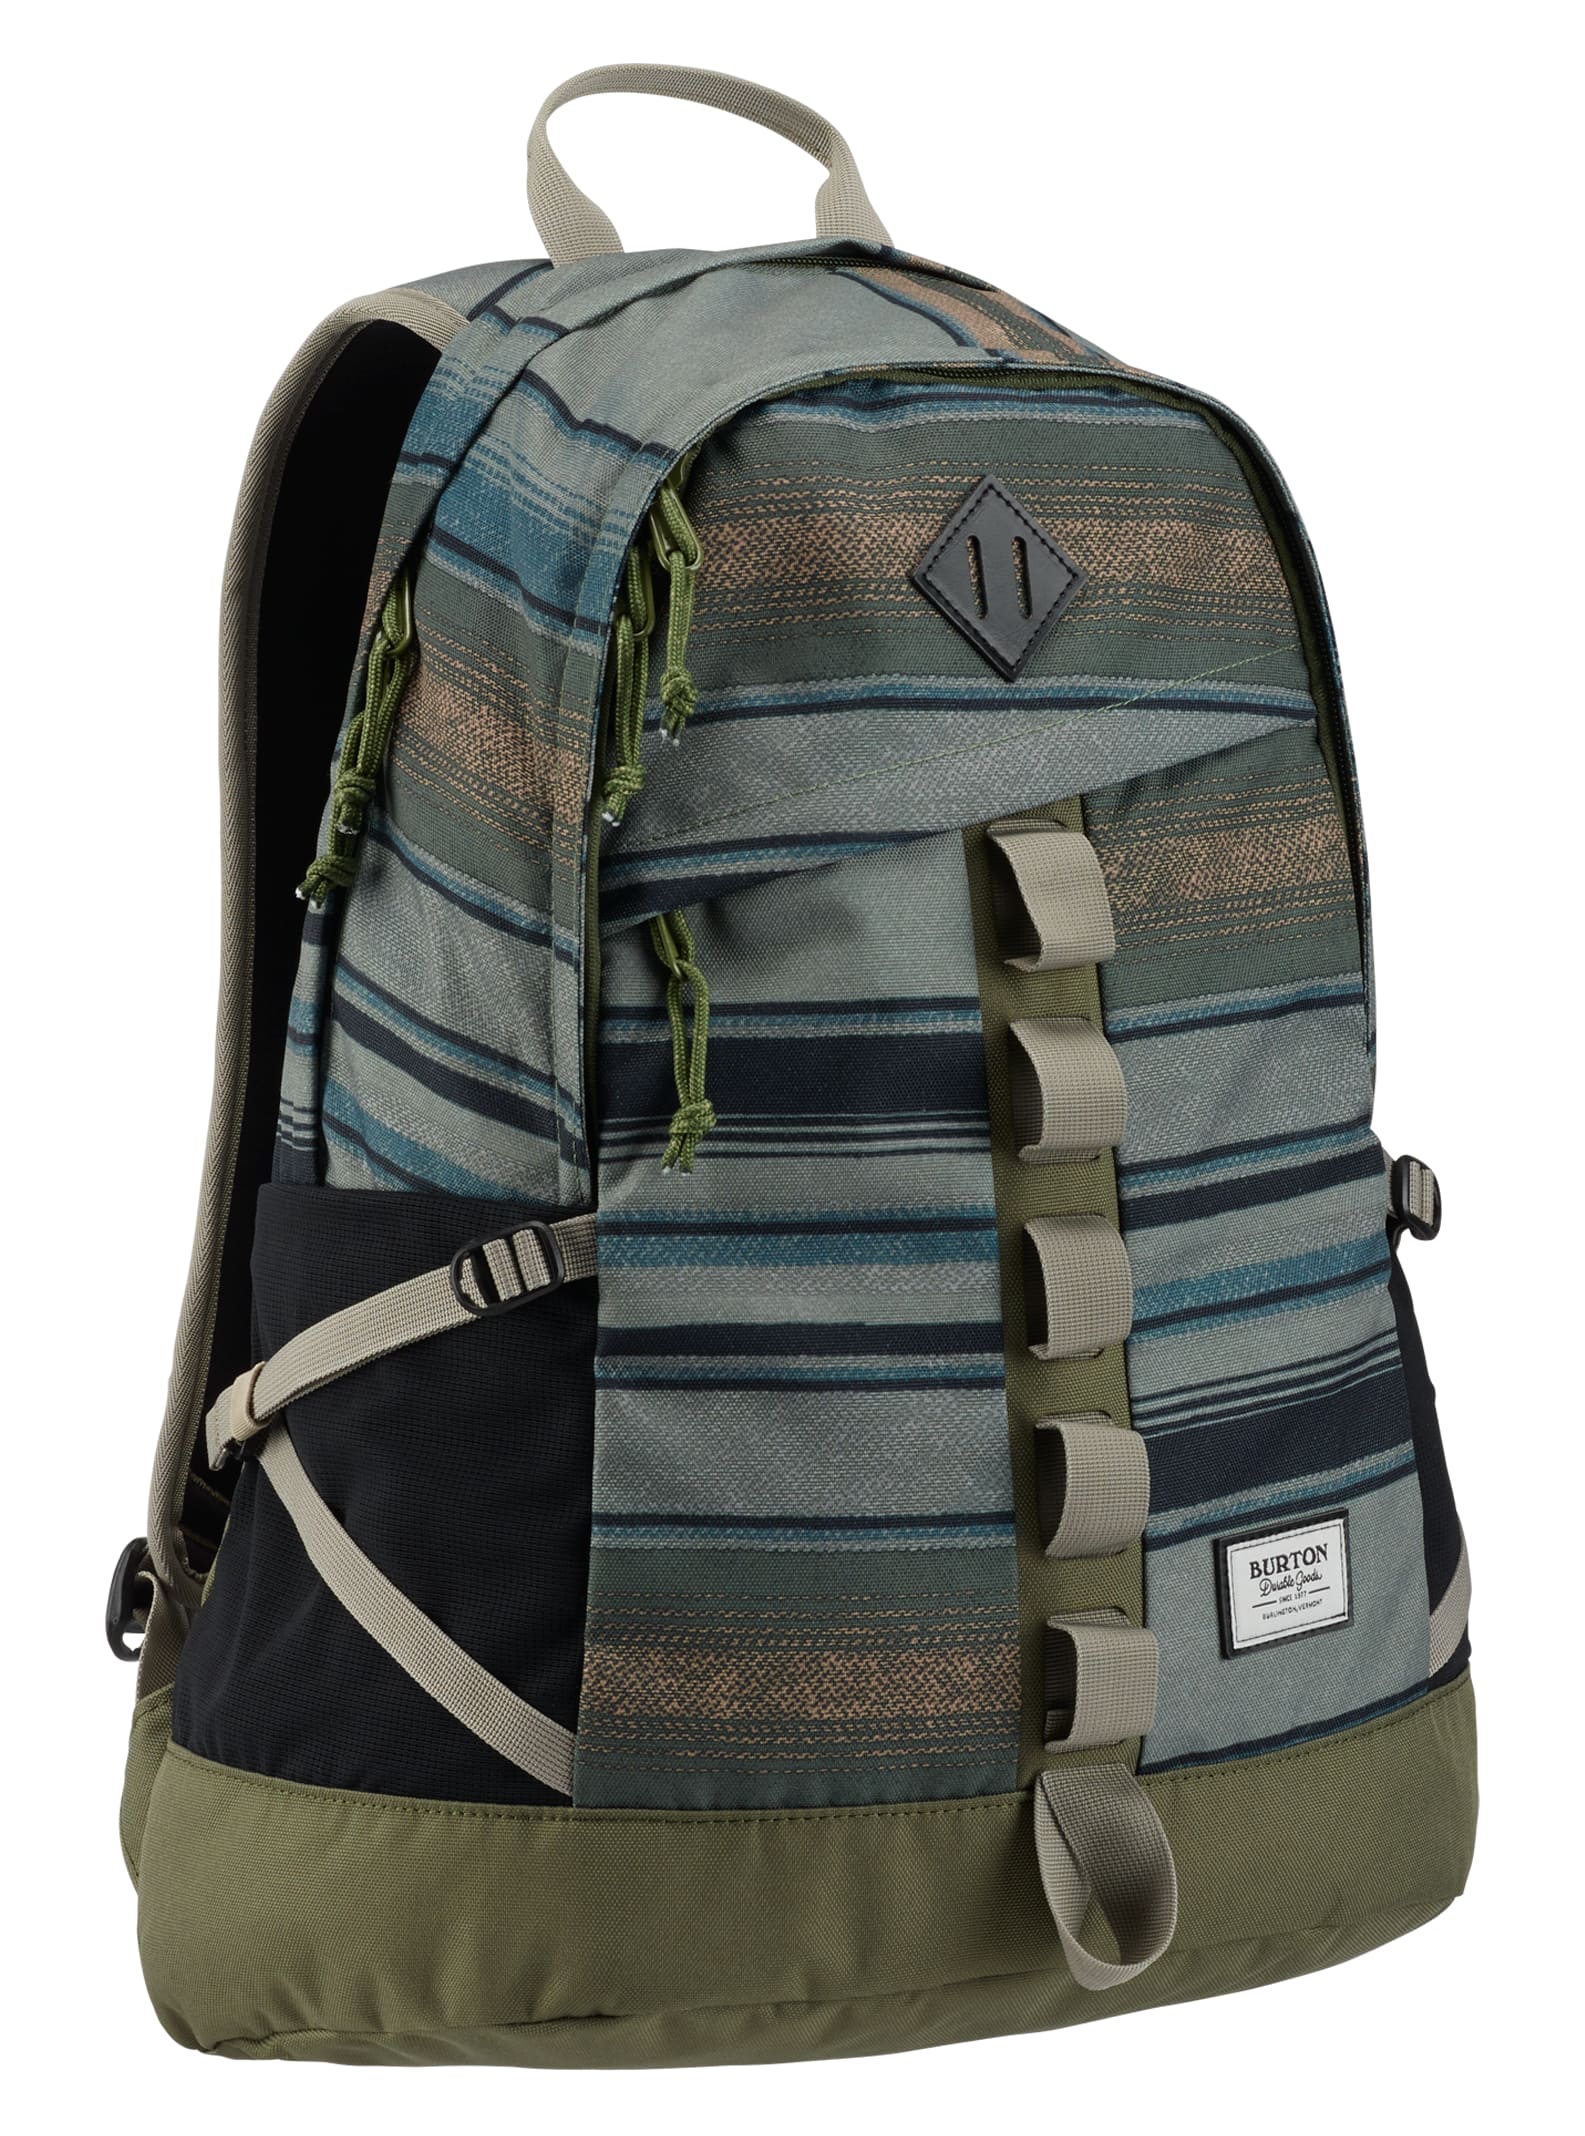 BURTON Shackford 24L  Backpack 新品未使用品